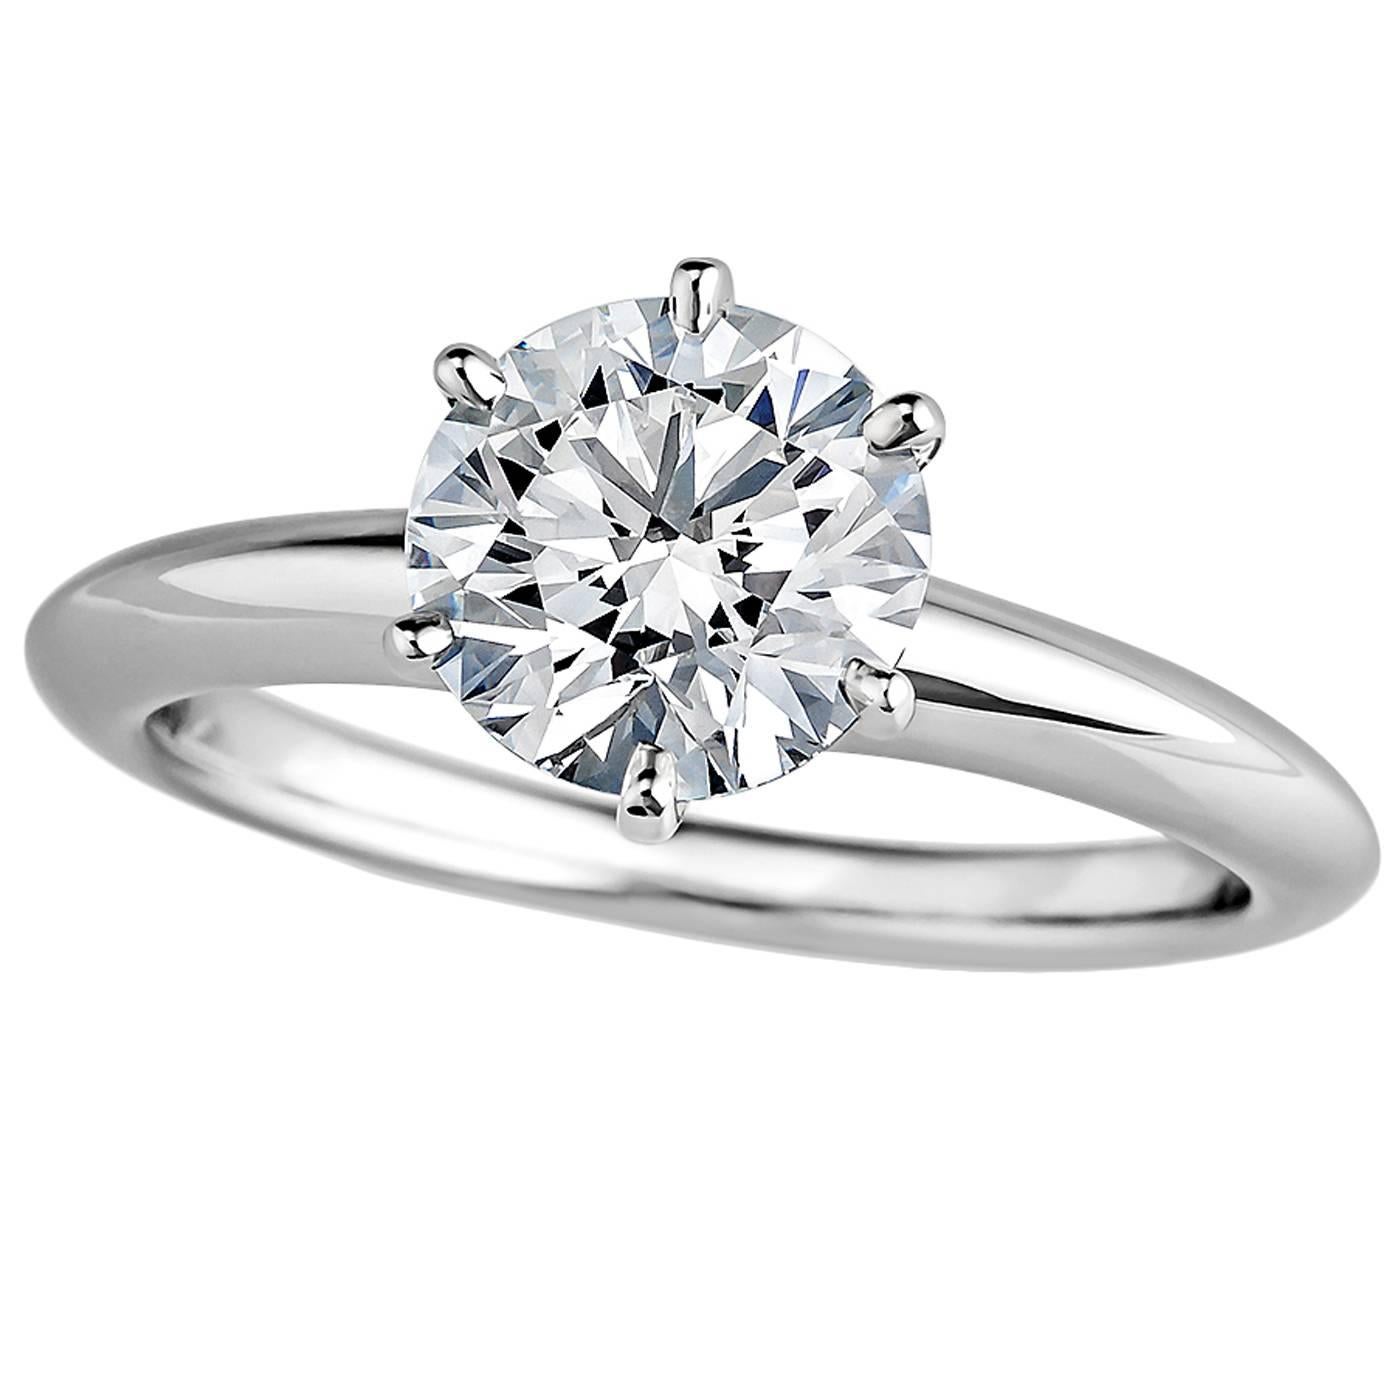 Tiffany & Co. 1.21 Carat Diamond Platinum Engagement Ring